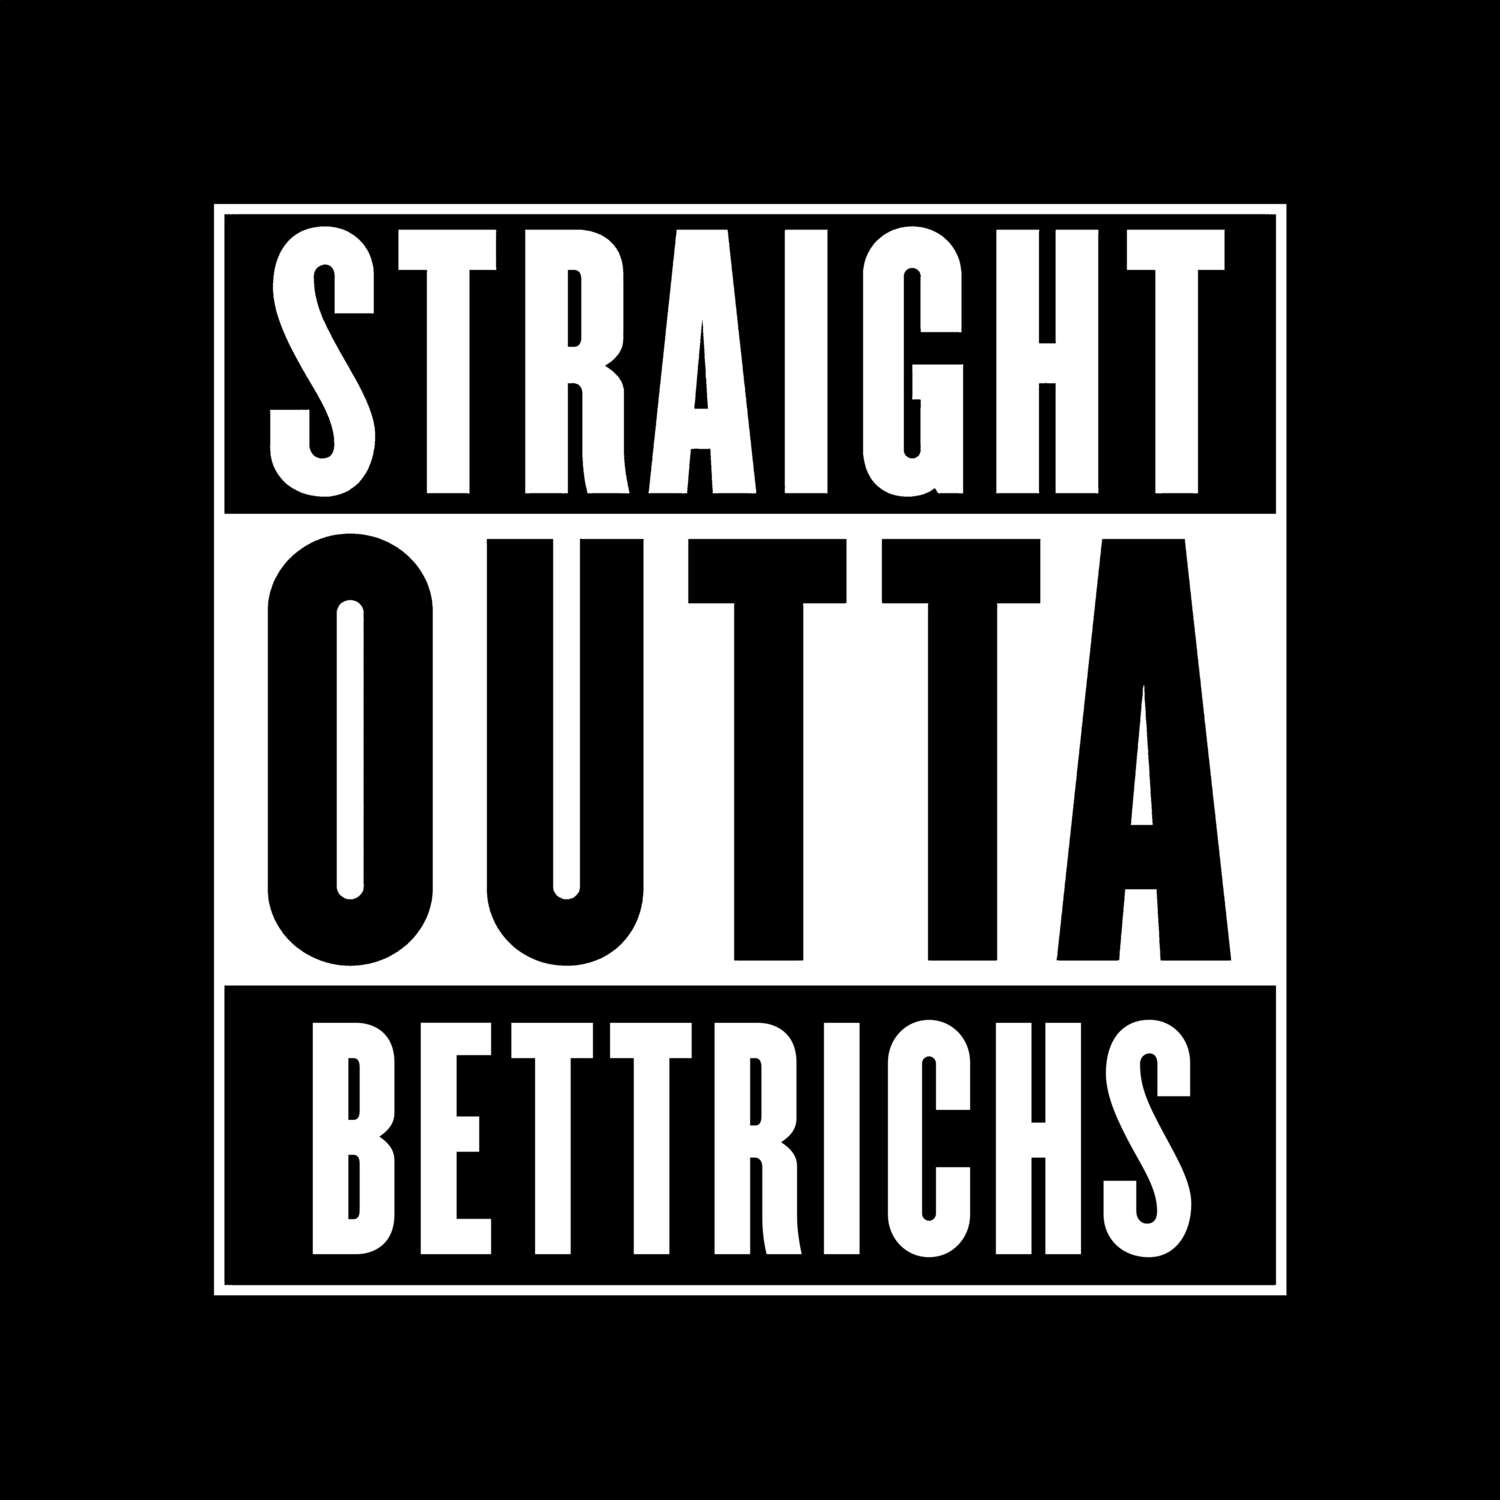 Bettrichs T-Shirt »Straight Outta«